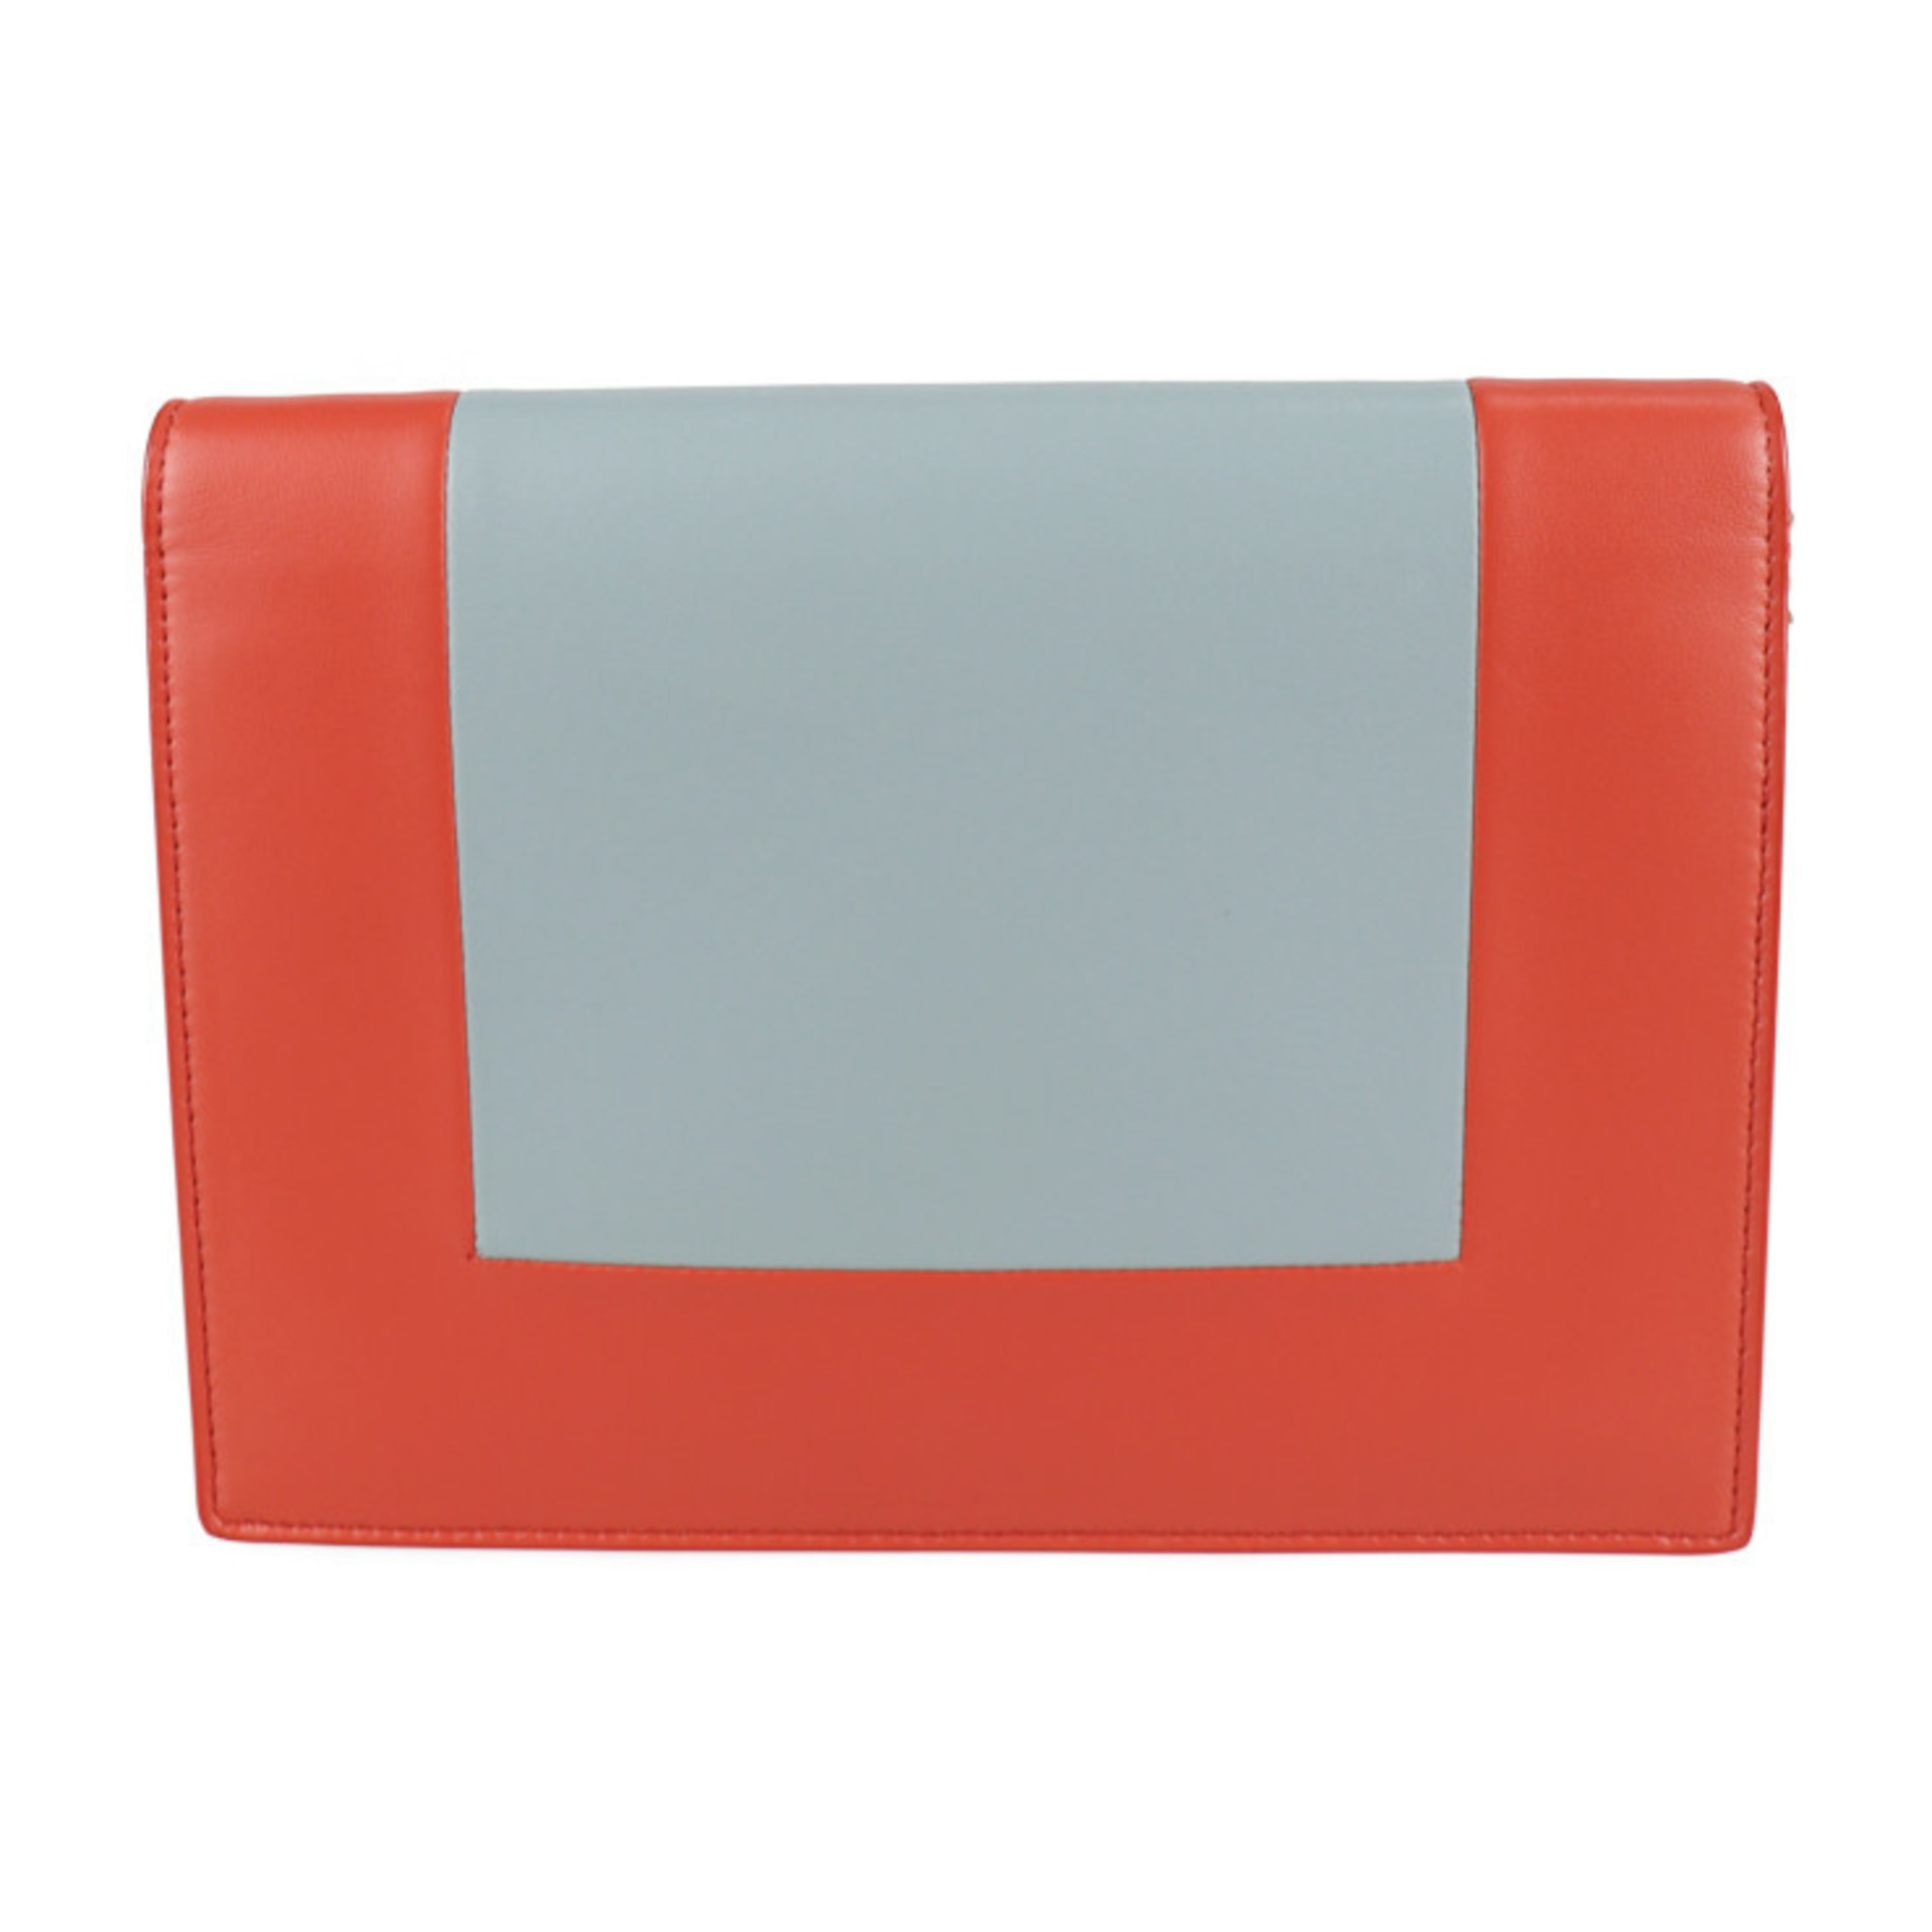 CELINE Celine Frame Evening Chain Wallet Clutch Bag 107773 Leather POPPY Red CLOUD Gray 2WAY Shoulder Diagonal